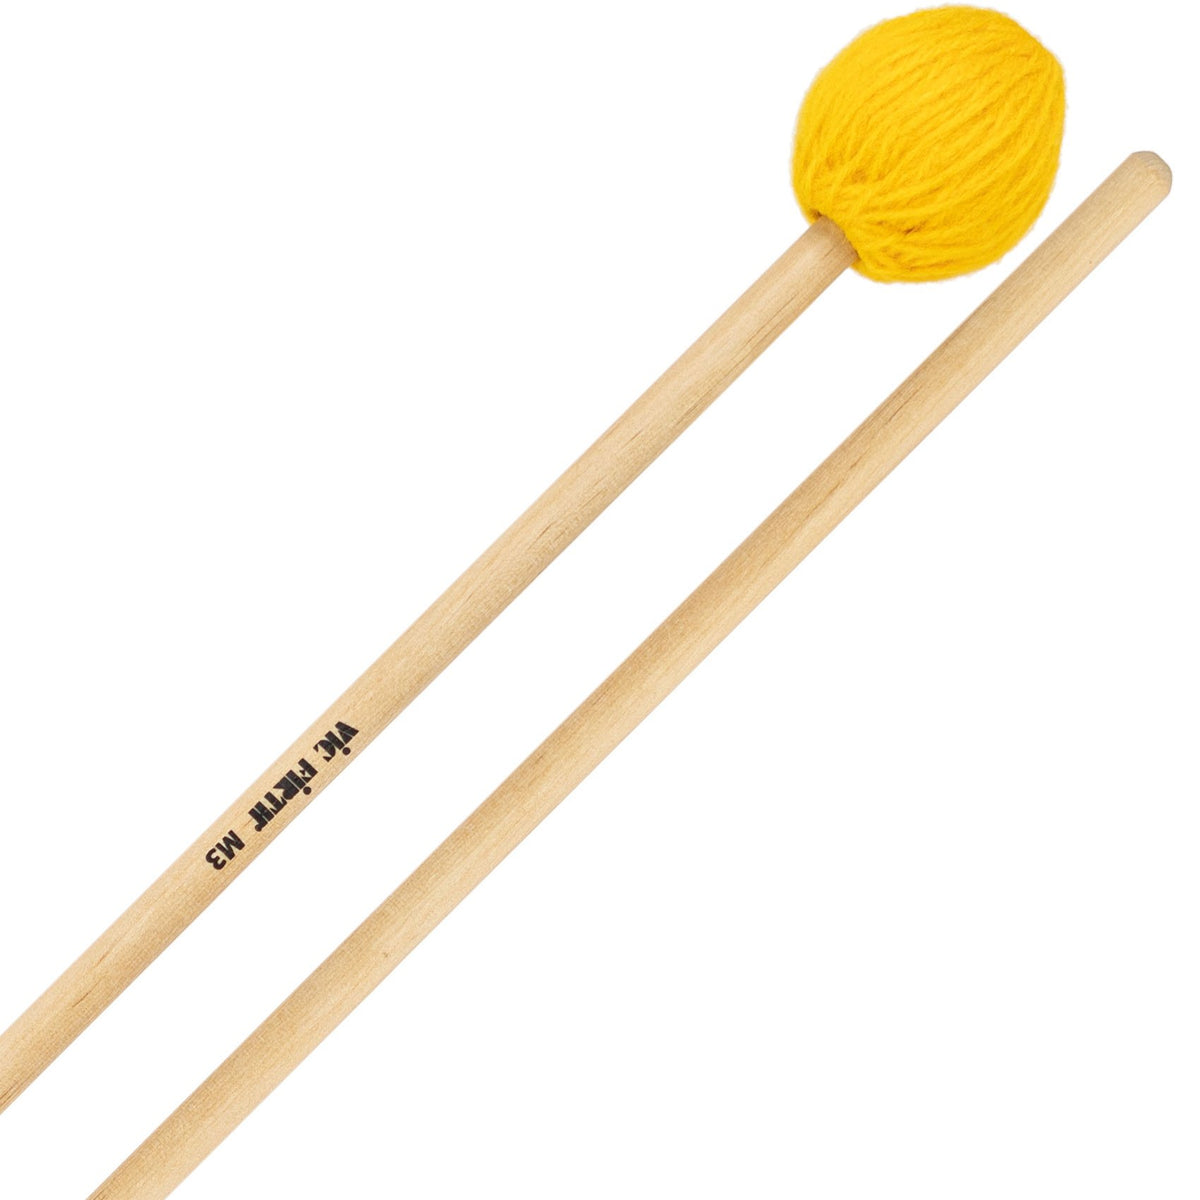 Marimba mallets Jasmin Kolberg Solo 4, 42 cm / common beech shaft (Ø 8 mm), yellow (hard)